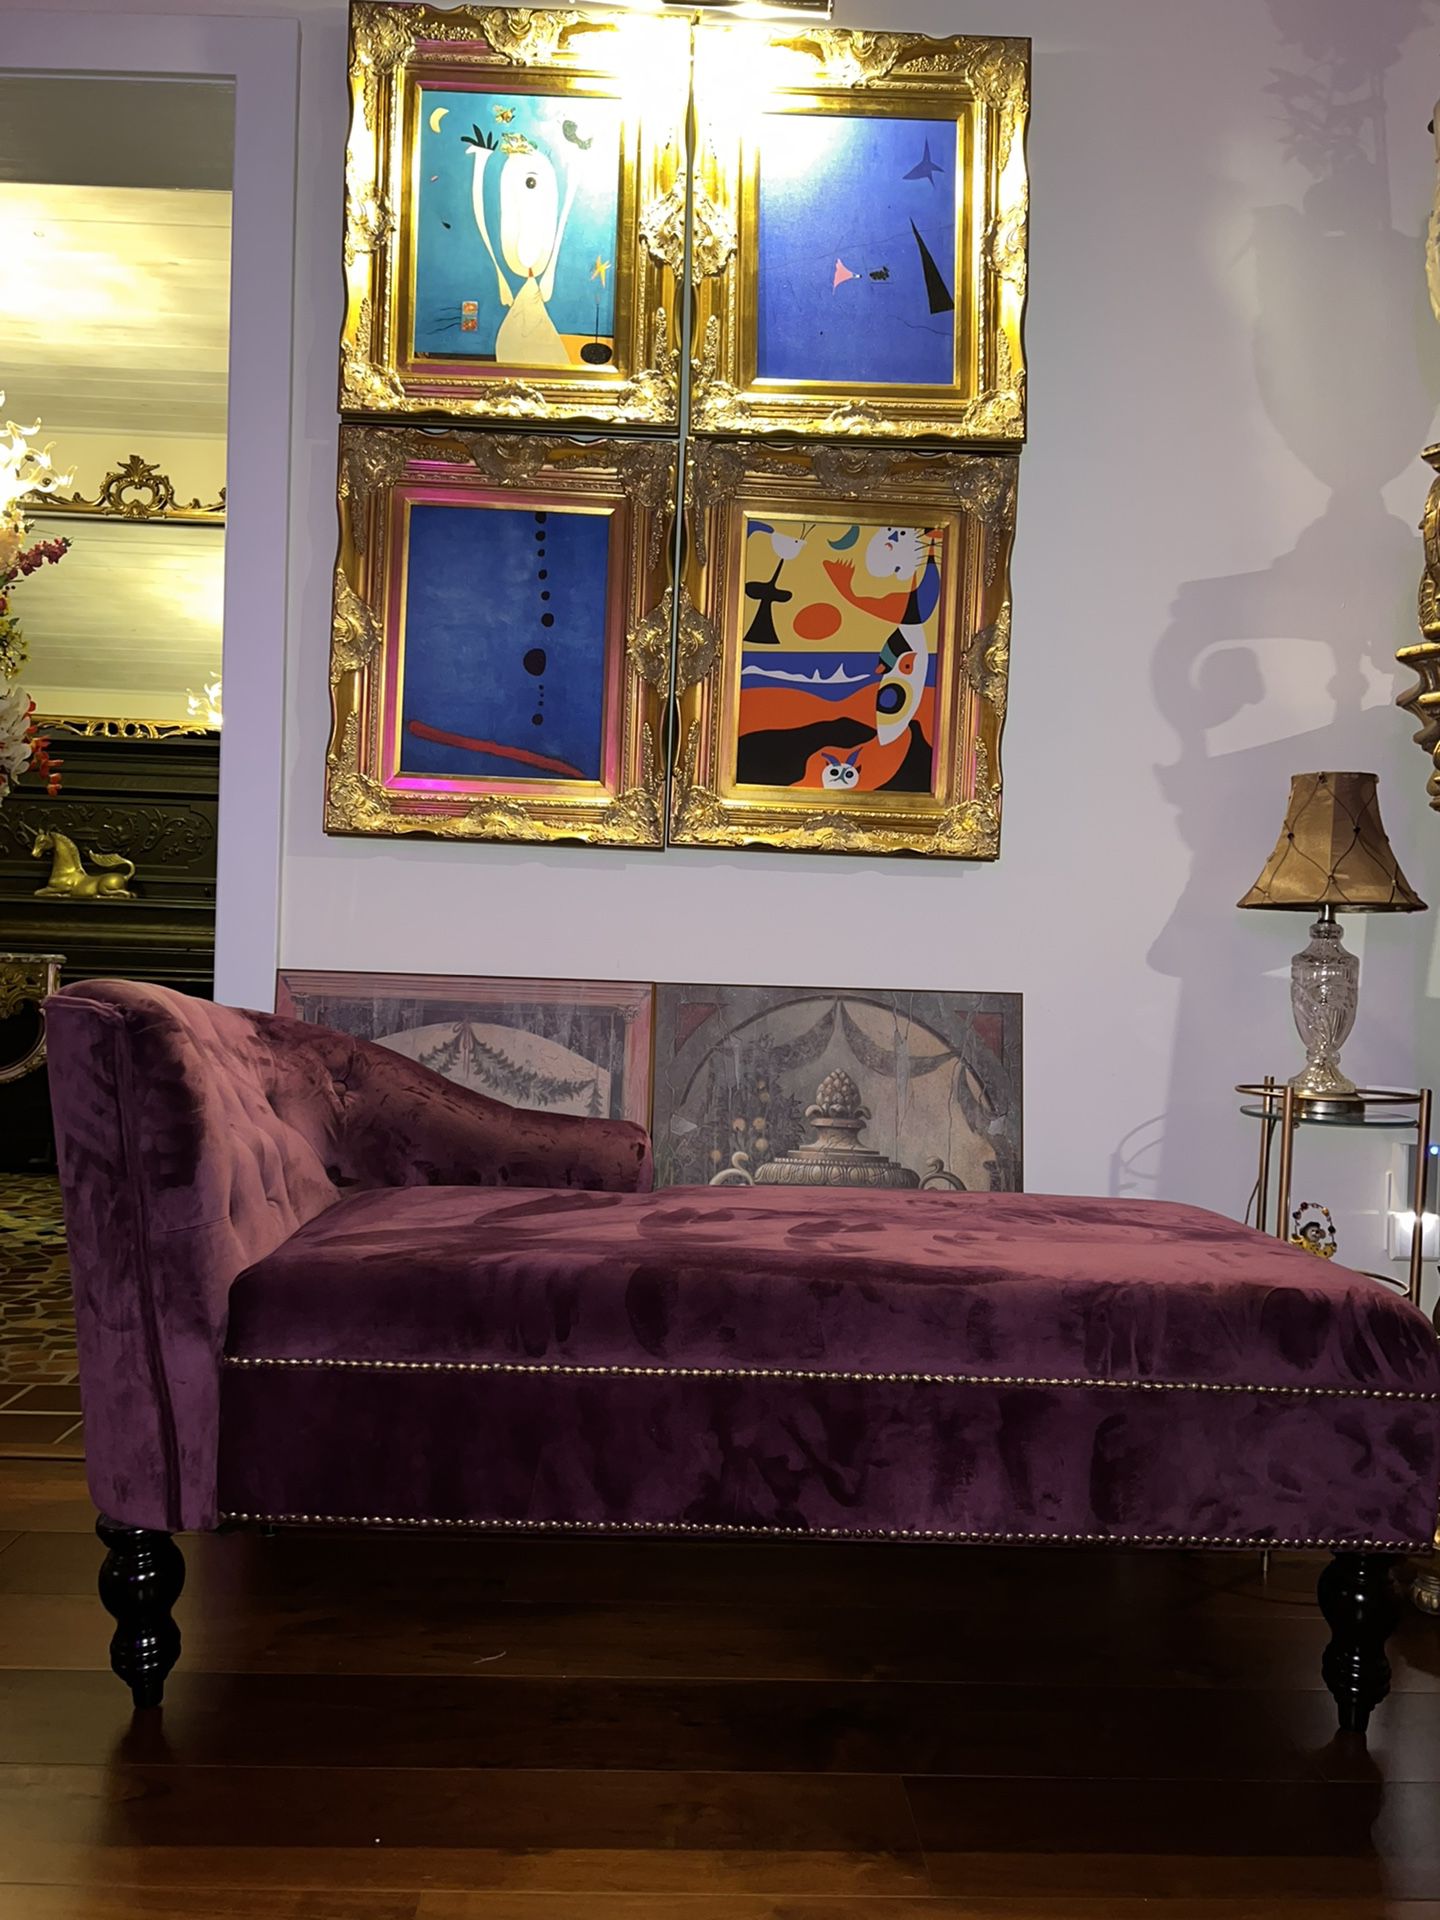 Chaise lounge Purple trendy , Chair, sofa Tufted BEAUTIFUL